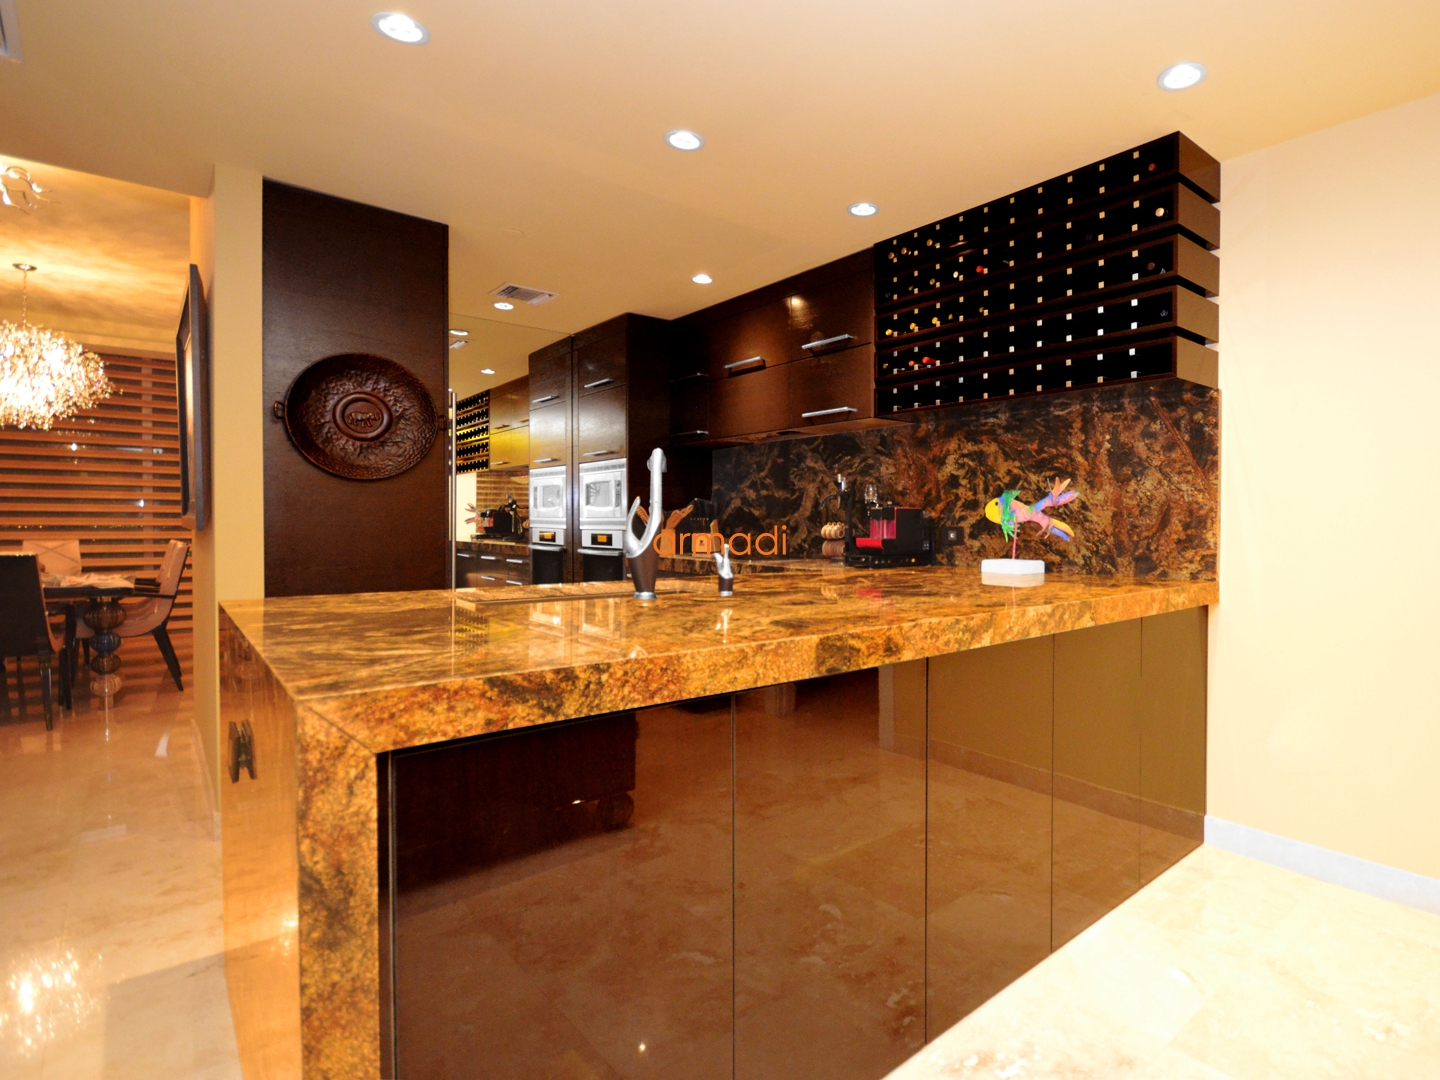 armadi custom furnitures custom design kitchens in miami